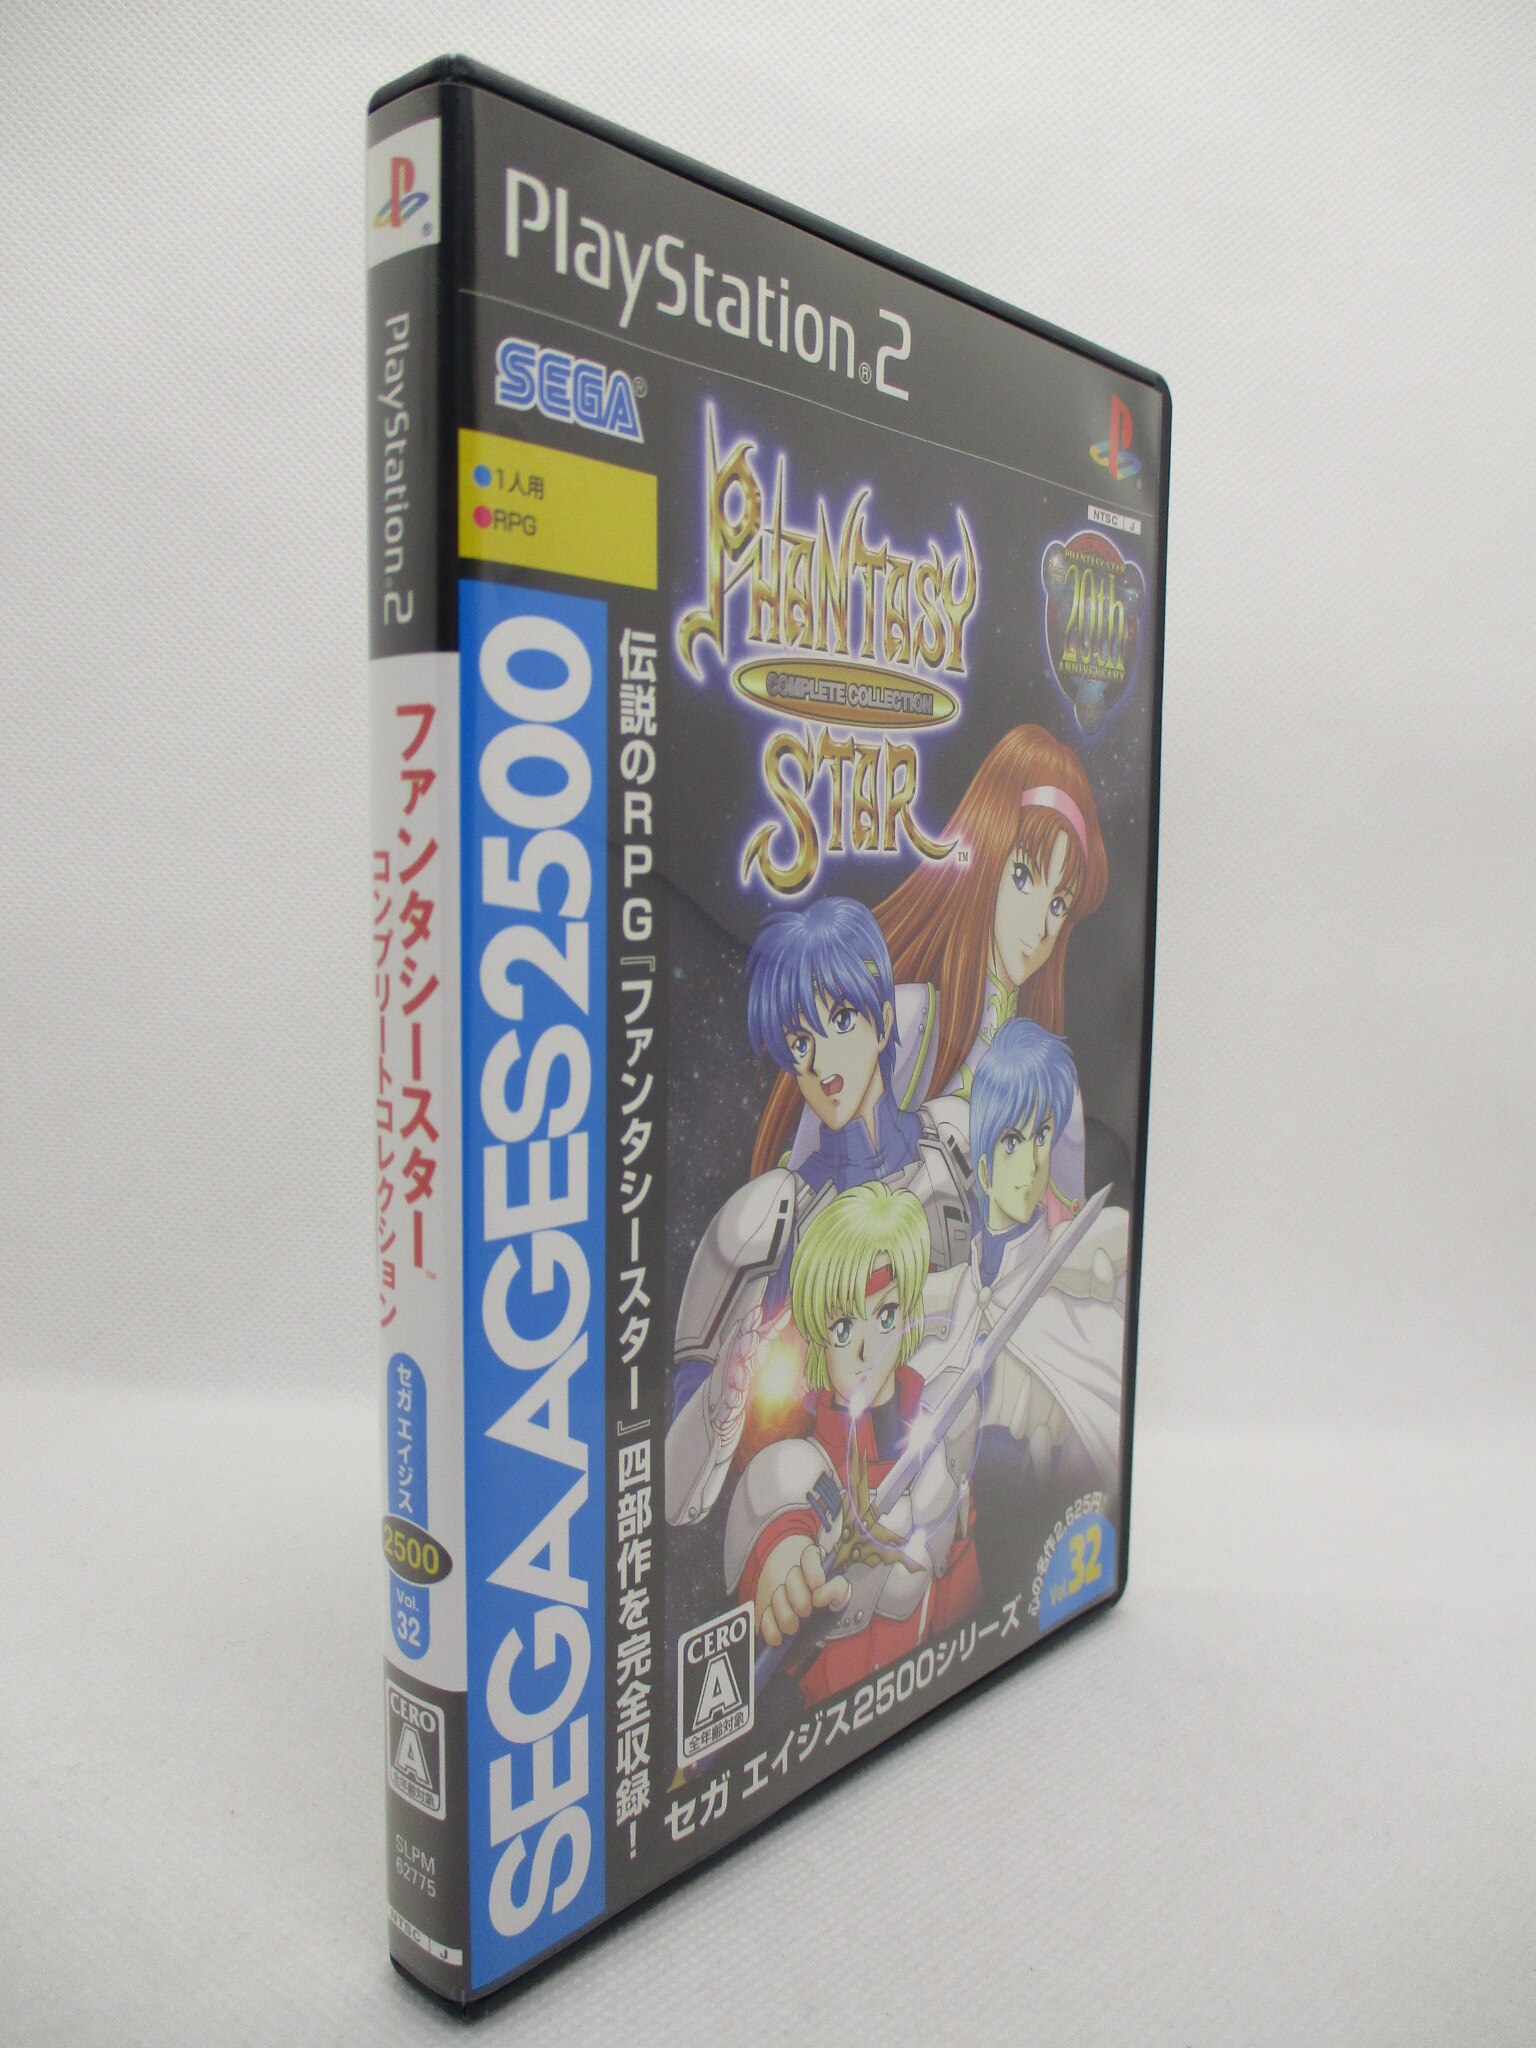 PS2 ファンタシースター コンプリートコレクション セガエイジス2500